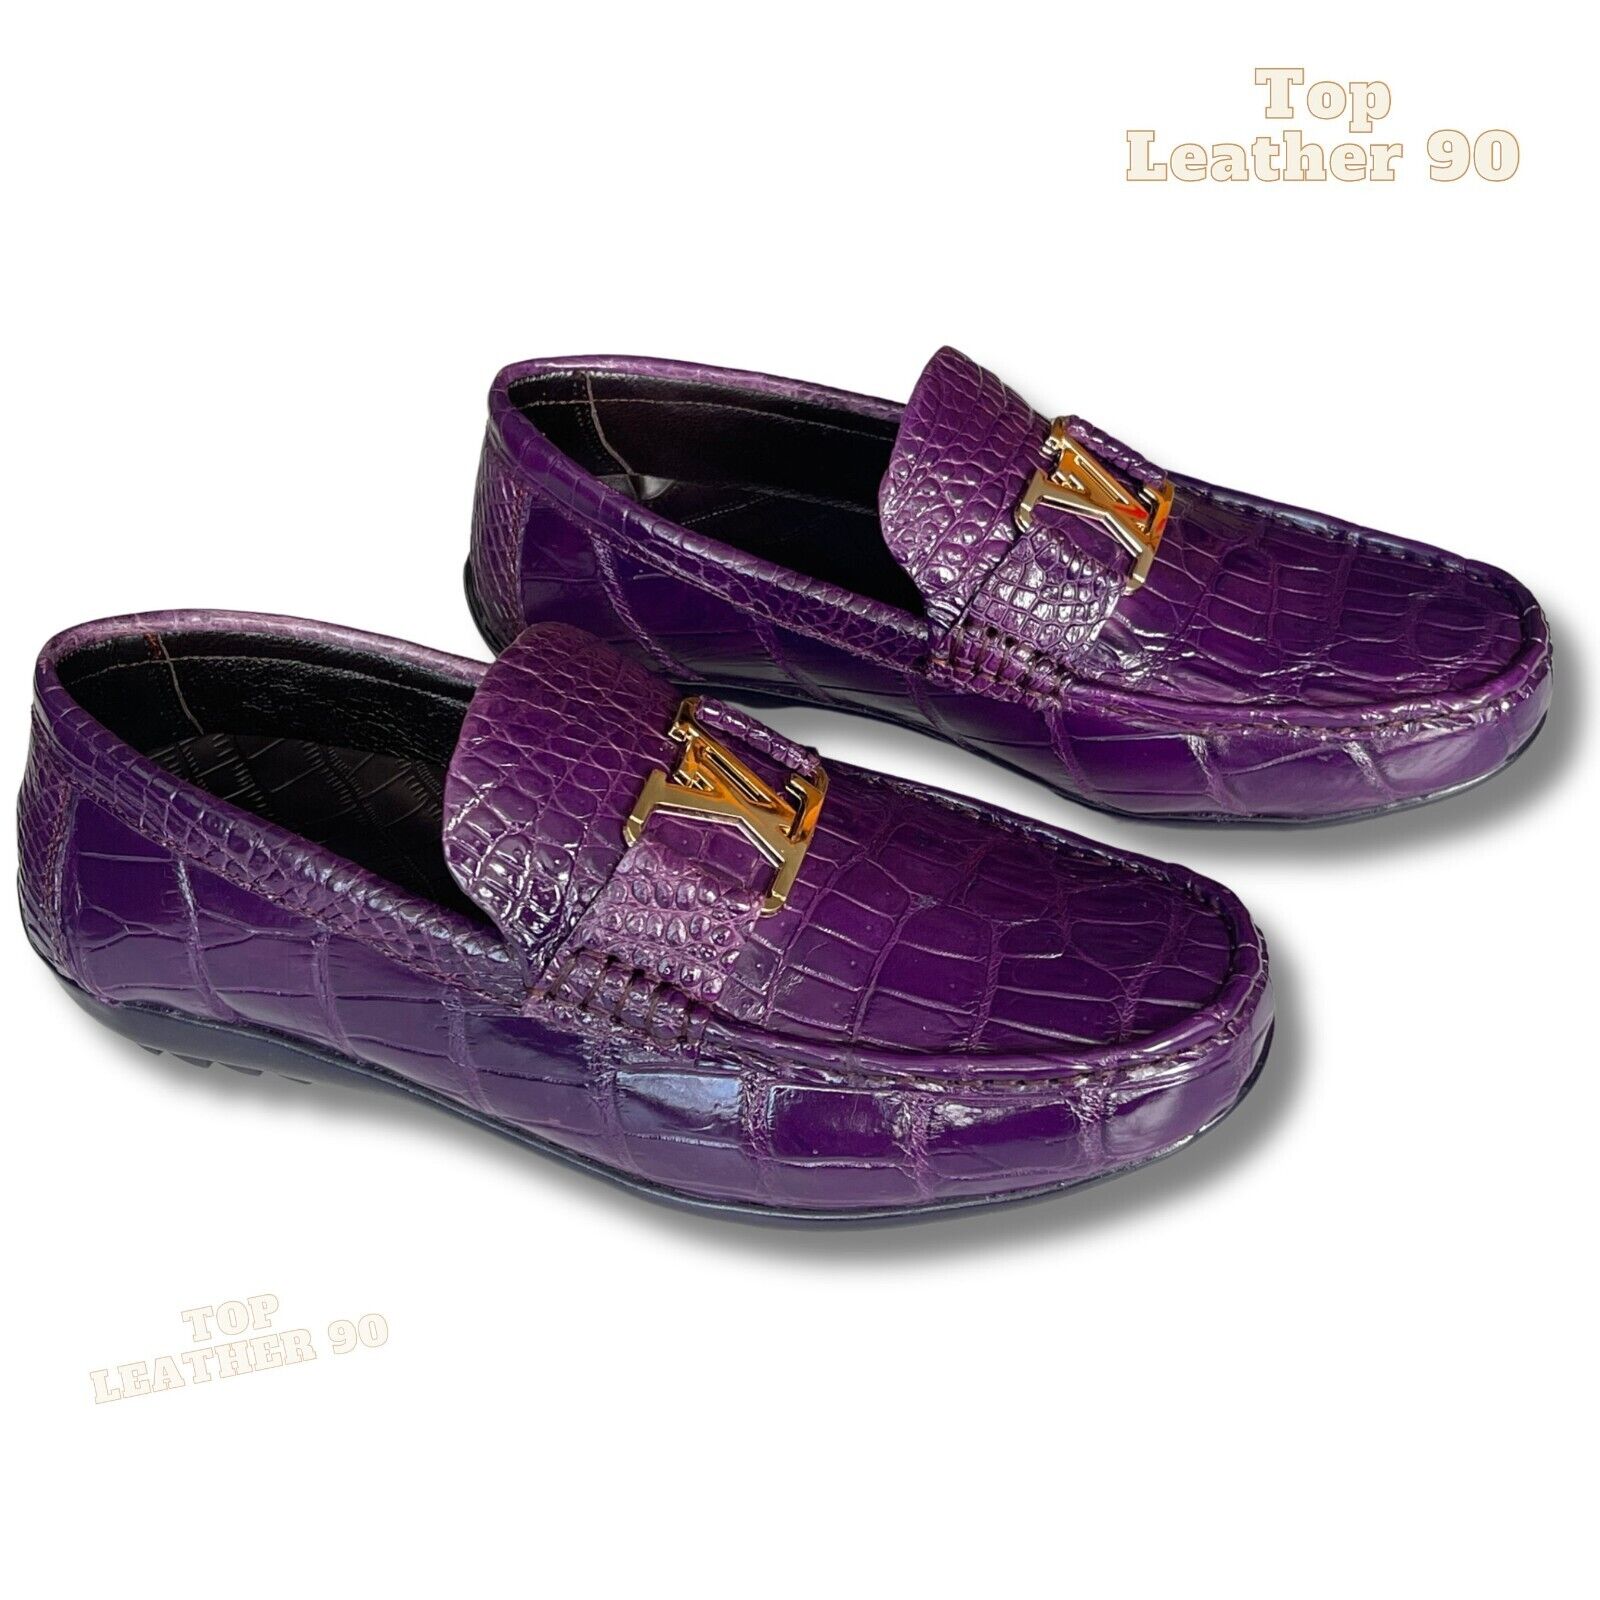 Pre-owned Handmade Men's Shoes Genuine Crocodile Alligator Skin Leather  Size Us11 - Eur44 In Brown